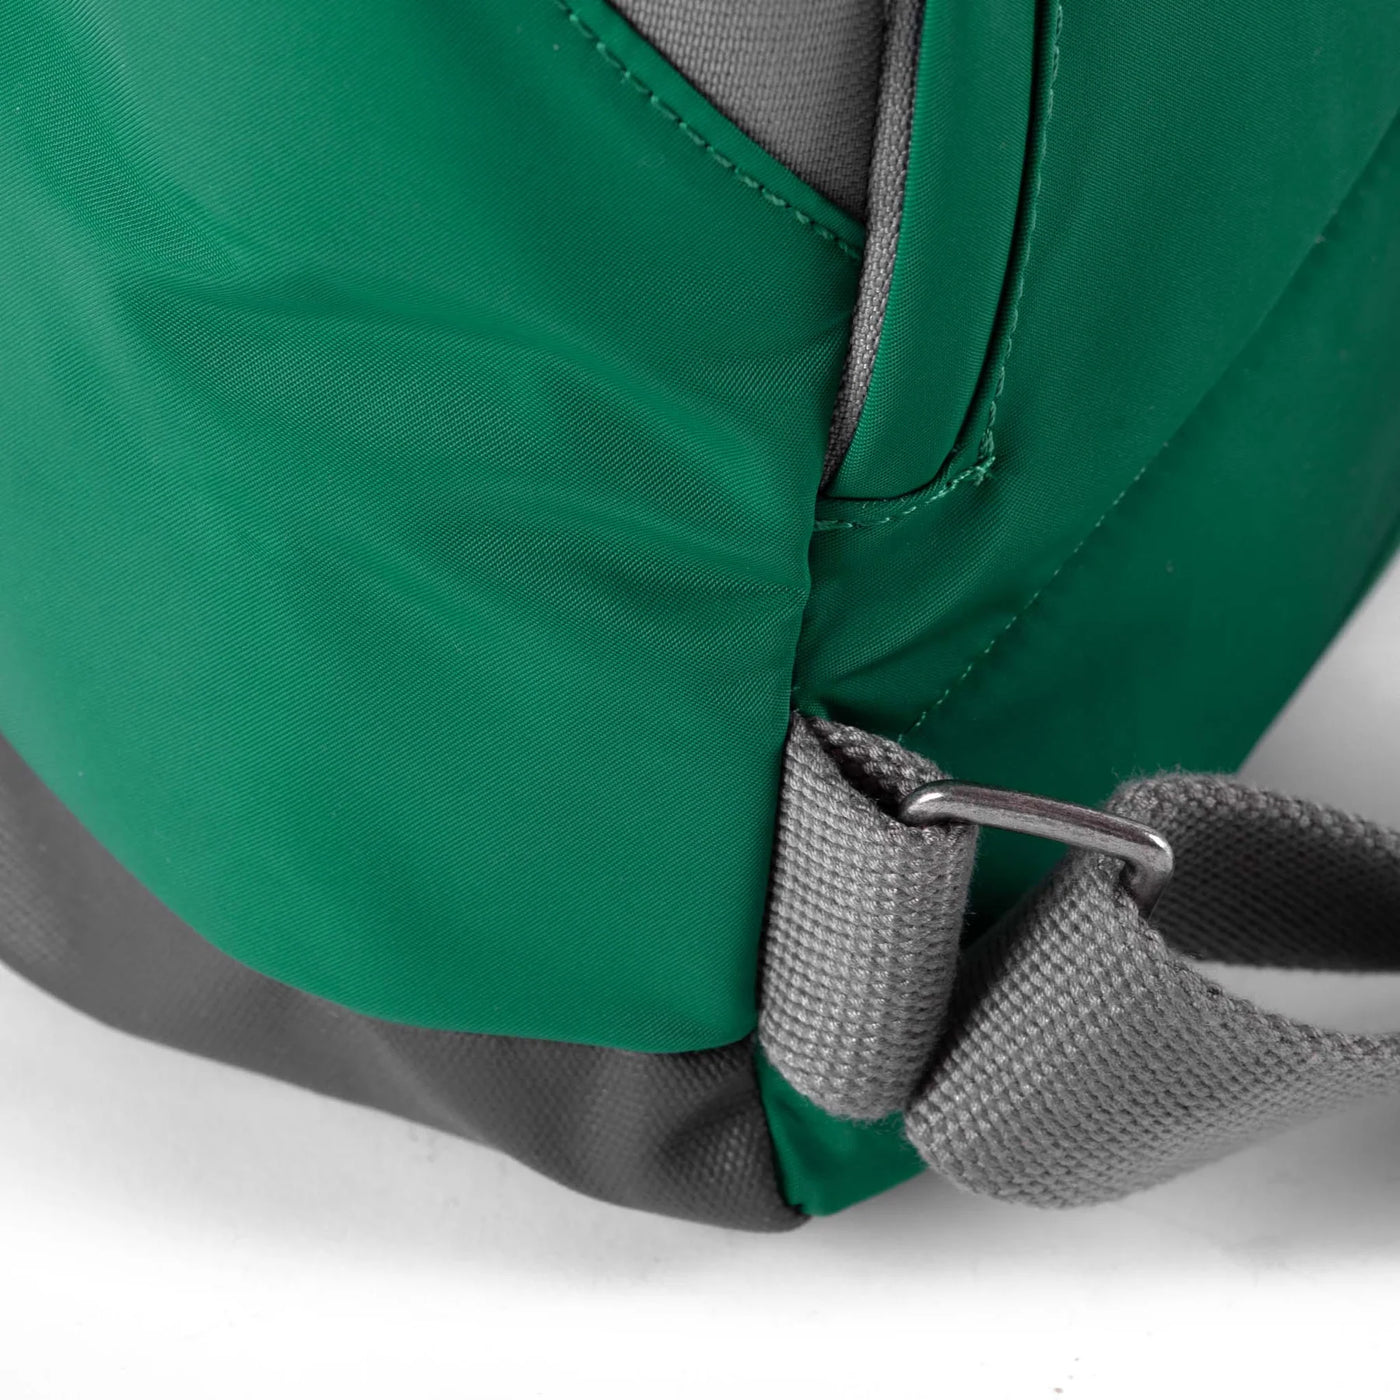 Roka Canfield B Backpack-Recycled Nylon - SMALL - Emerald Green